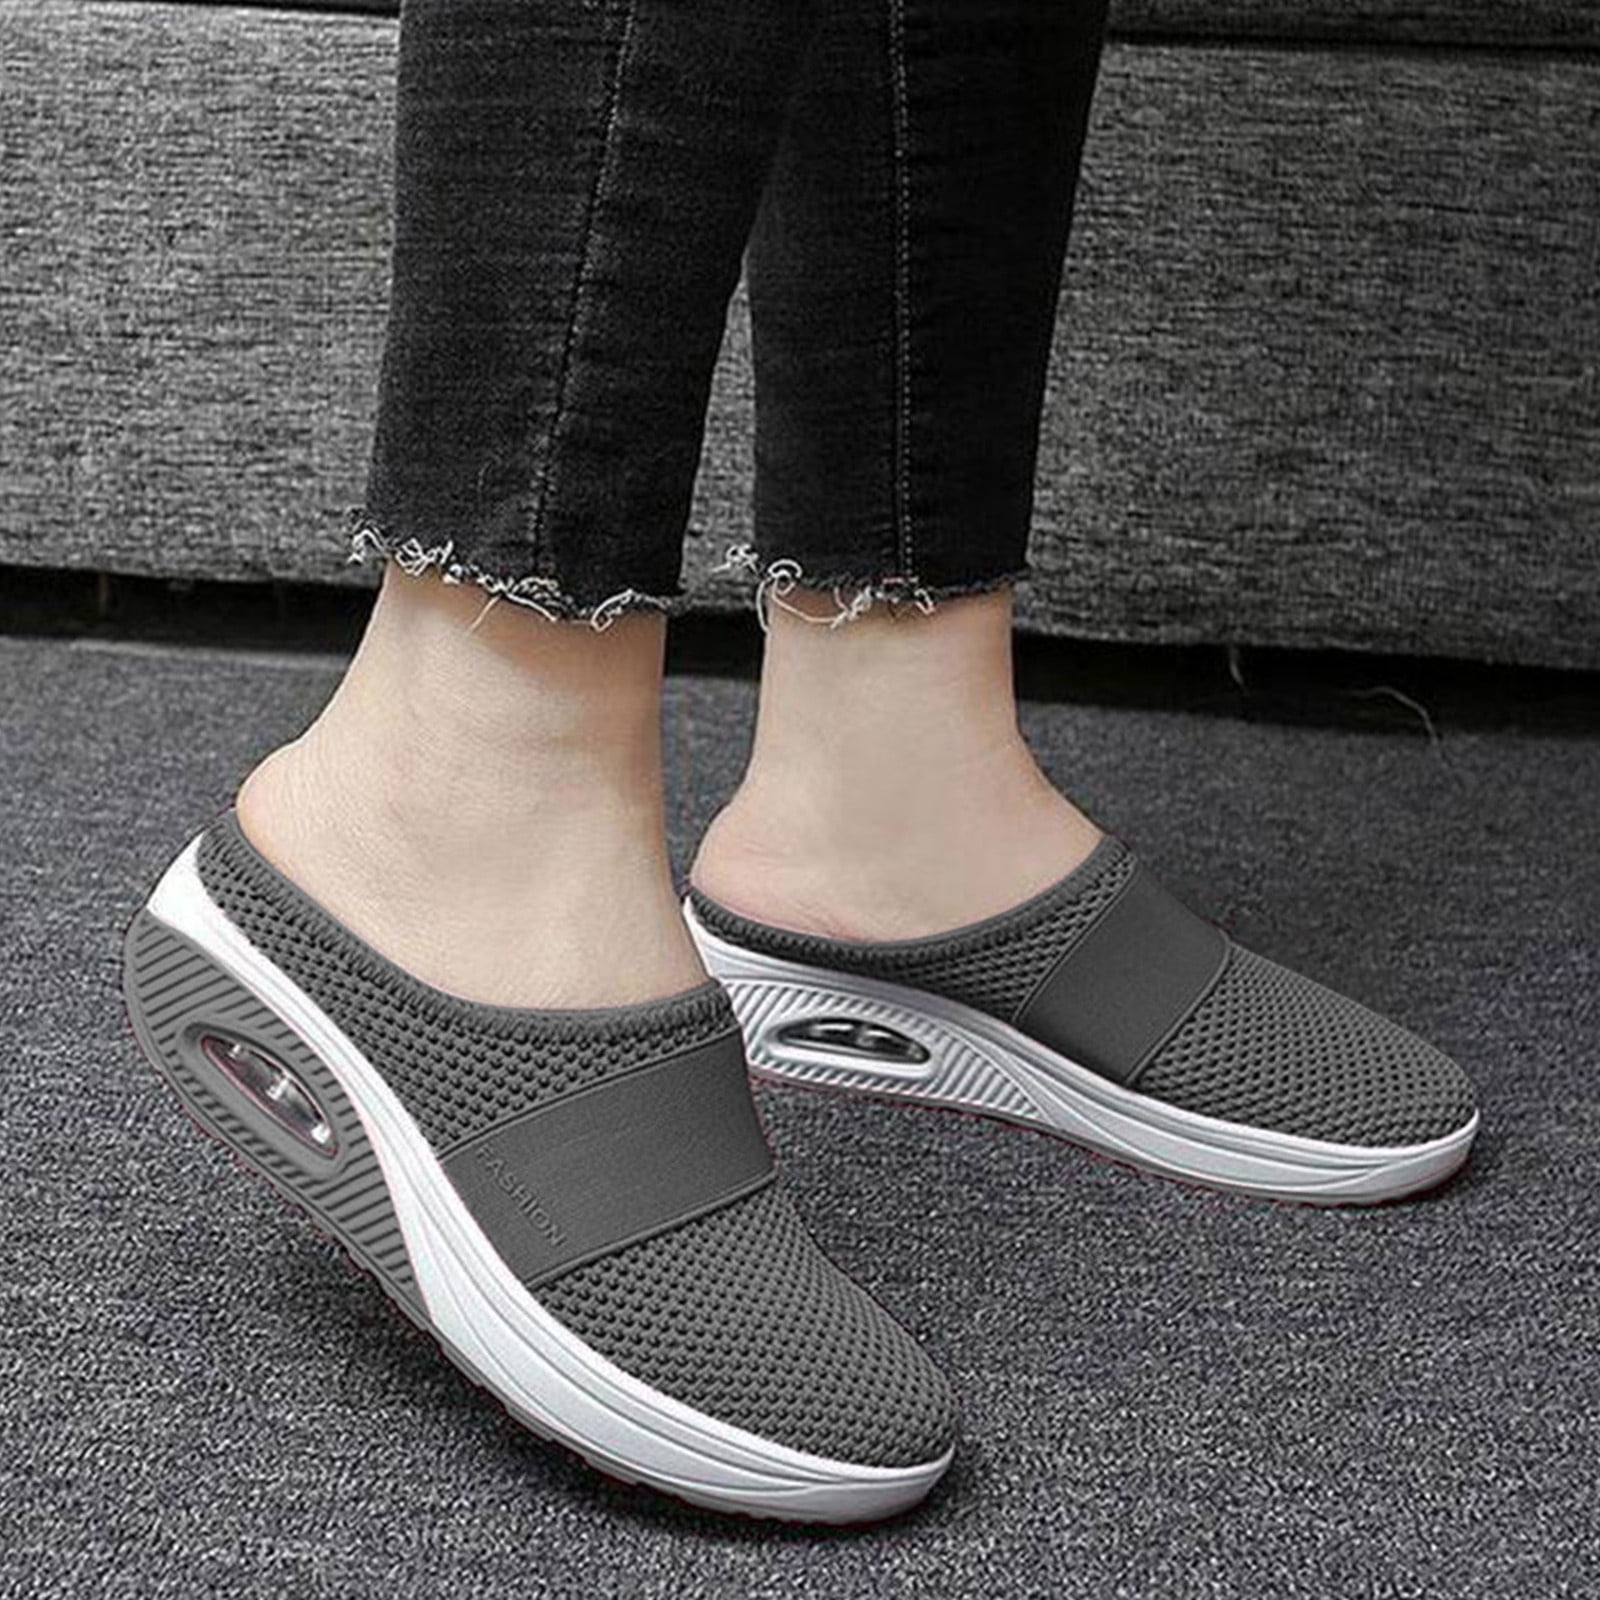 TLOAIO Women's Air Cushion Slip-On Walking Shoes,Orthopedic Diabetic Walking Shoes for Womens,Breathable Casual Air Cushion Slip-on Shoes Black,37 